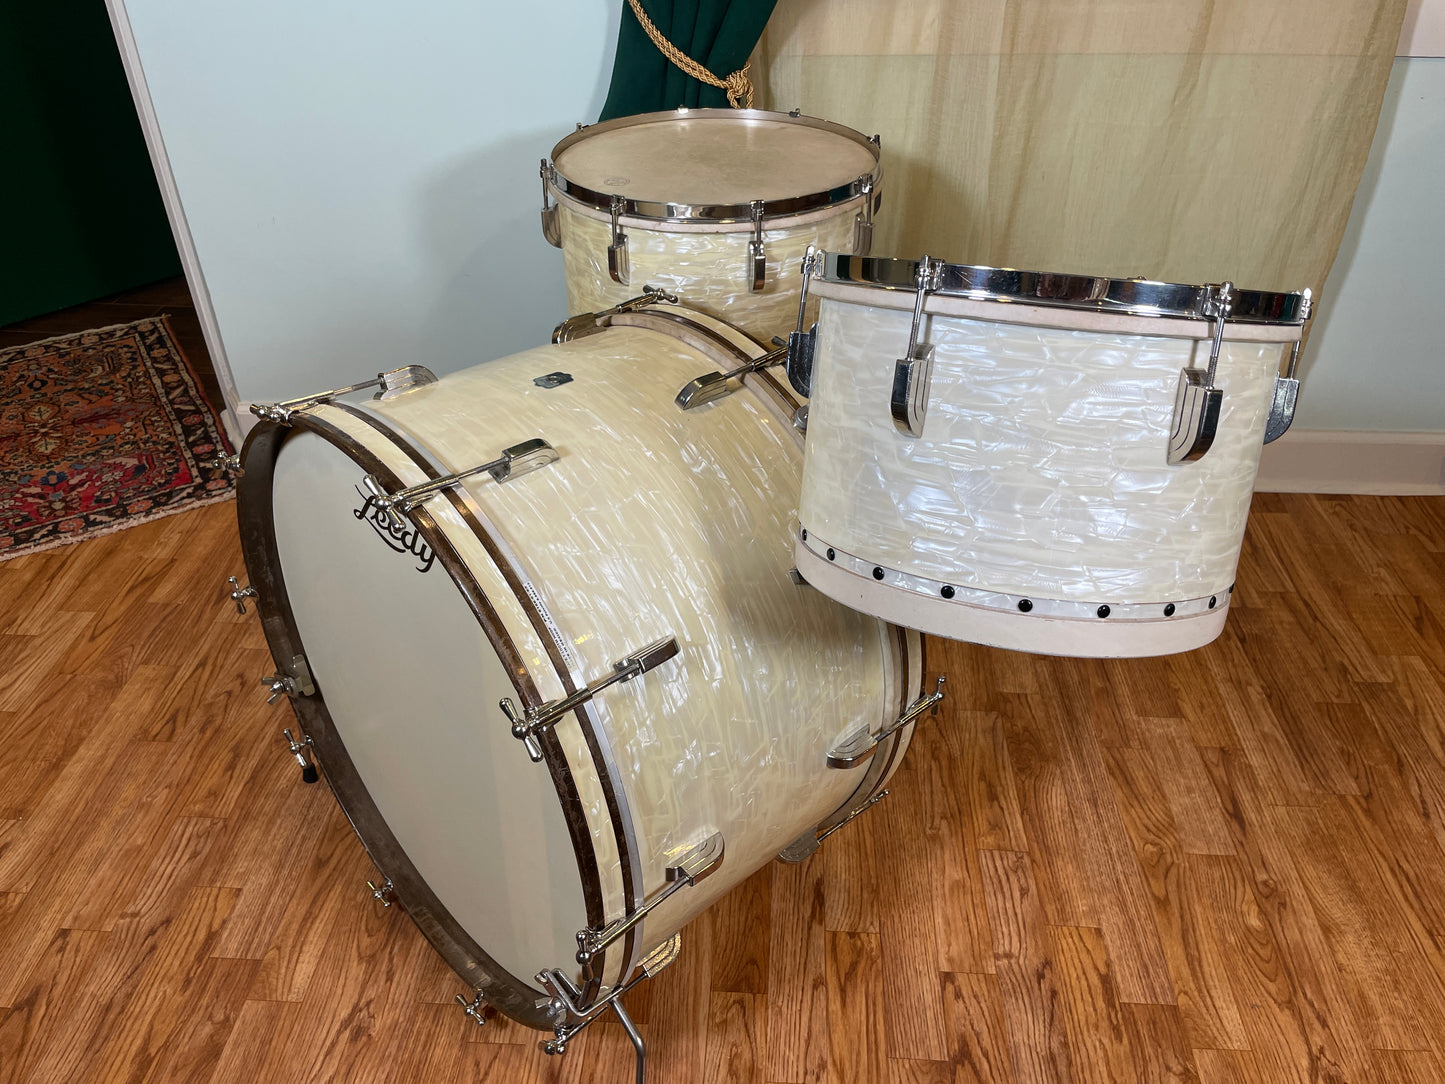 1940s Leedy Drum Set White Marine Pearl 24/13/16